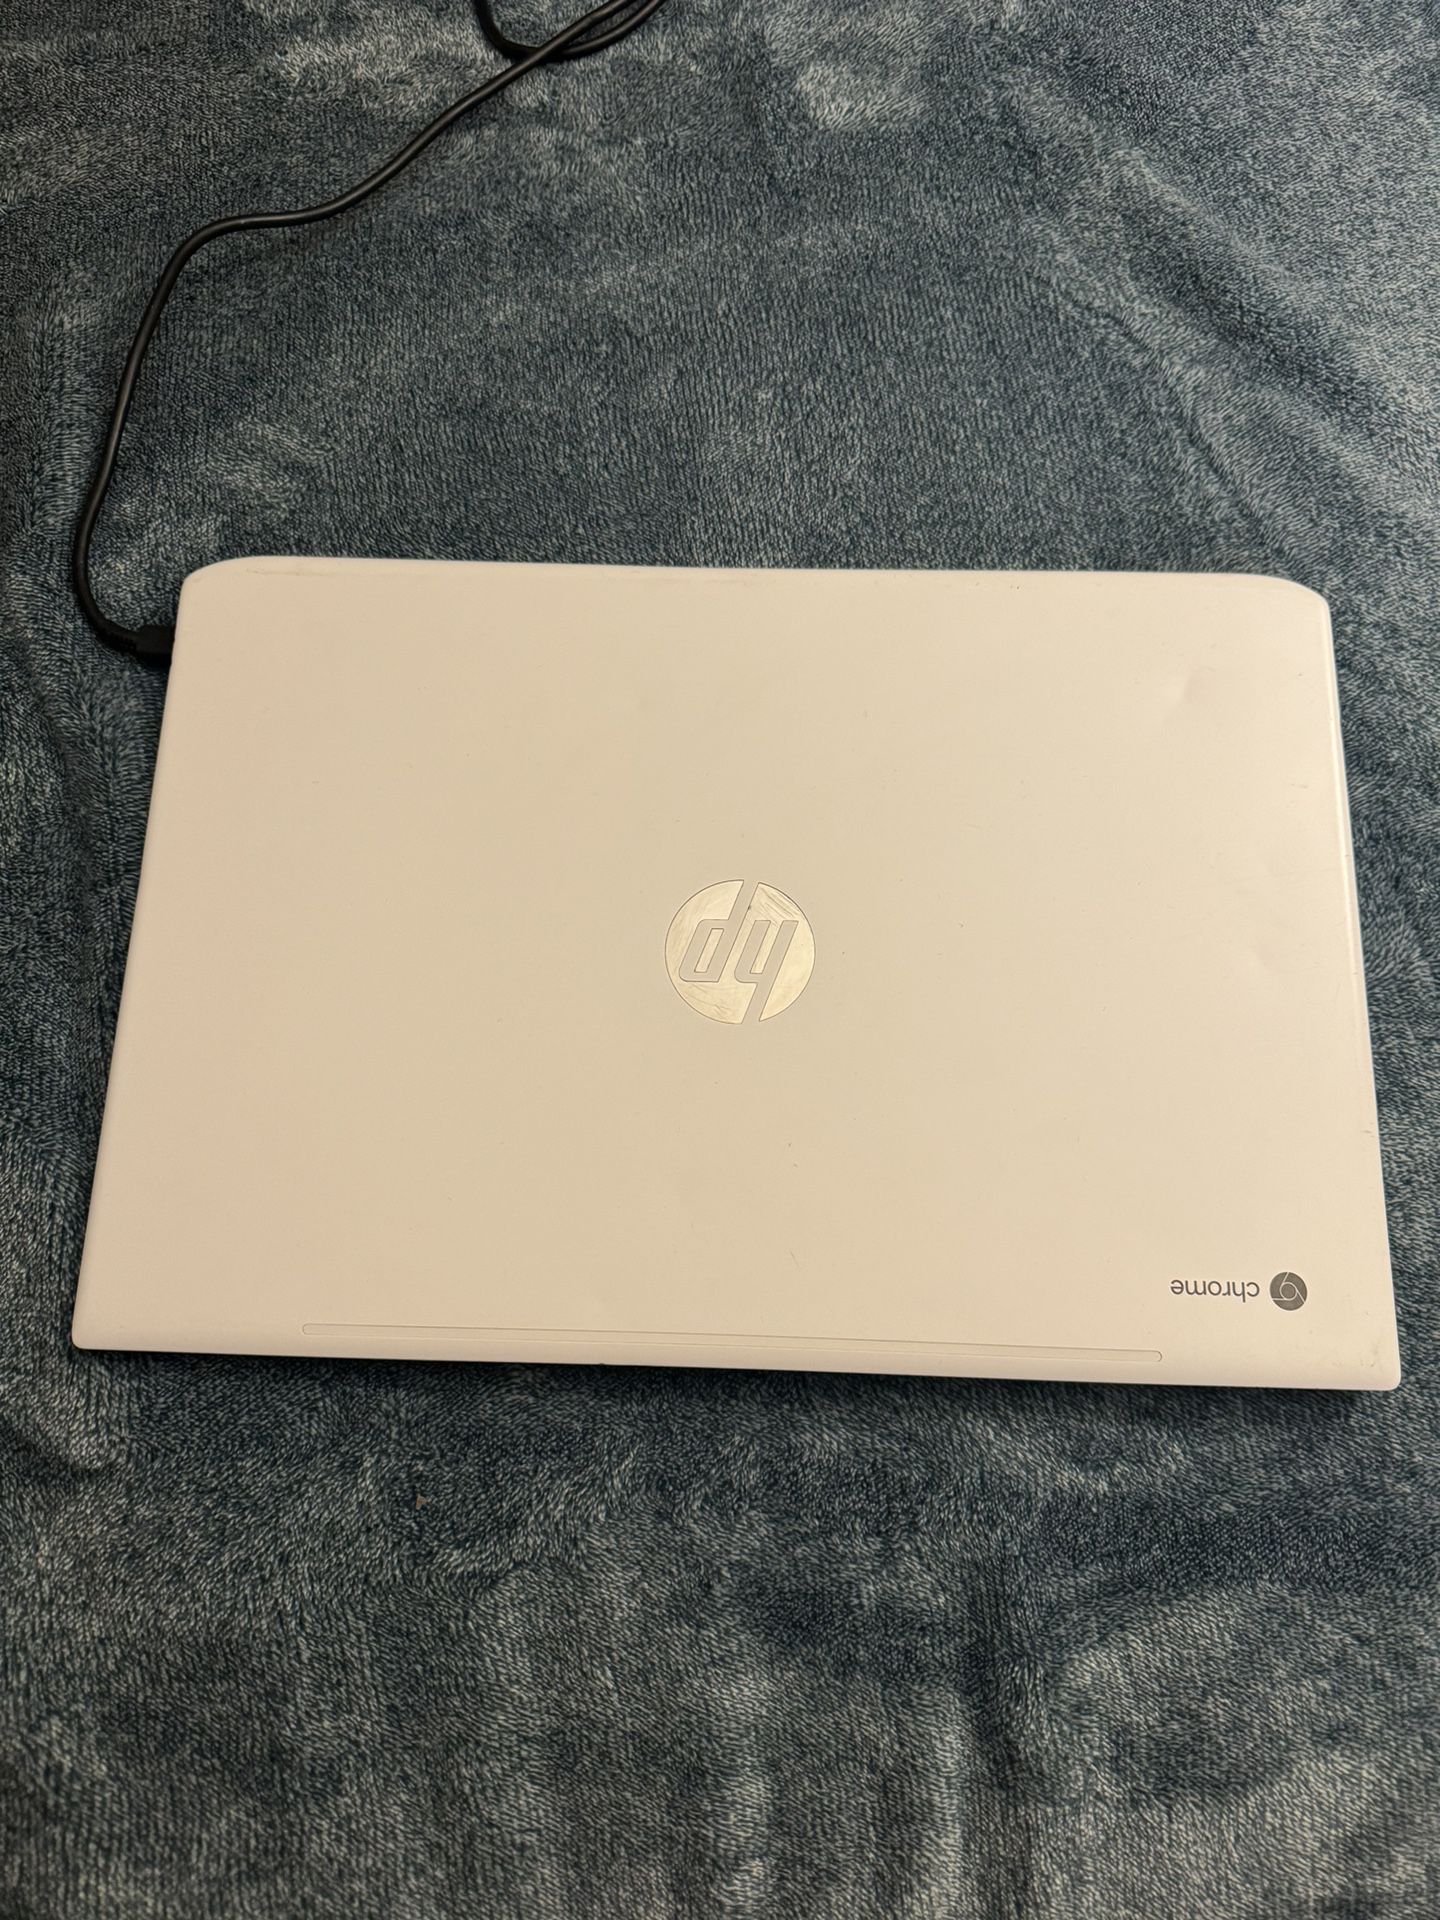 Laptop Hp Chromebook 15